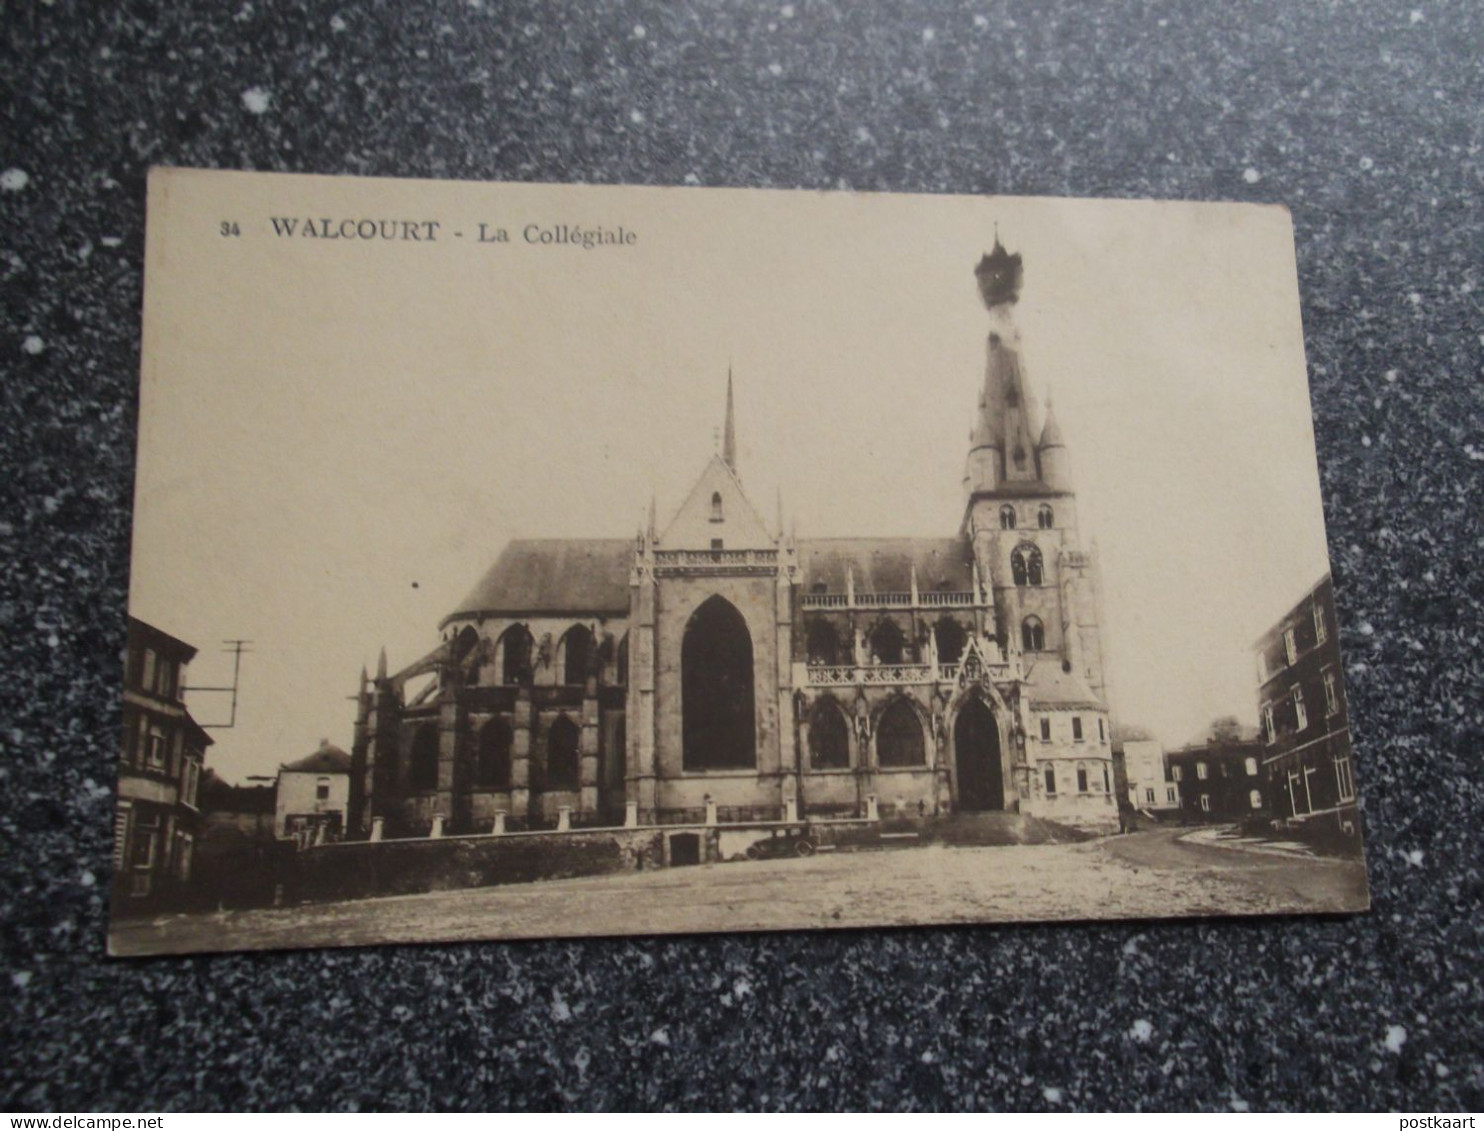 WALCOURT: La Collégiale - Walcourt